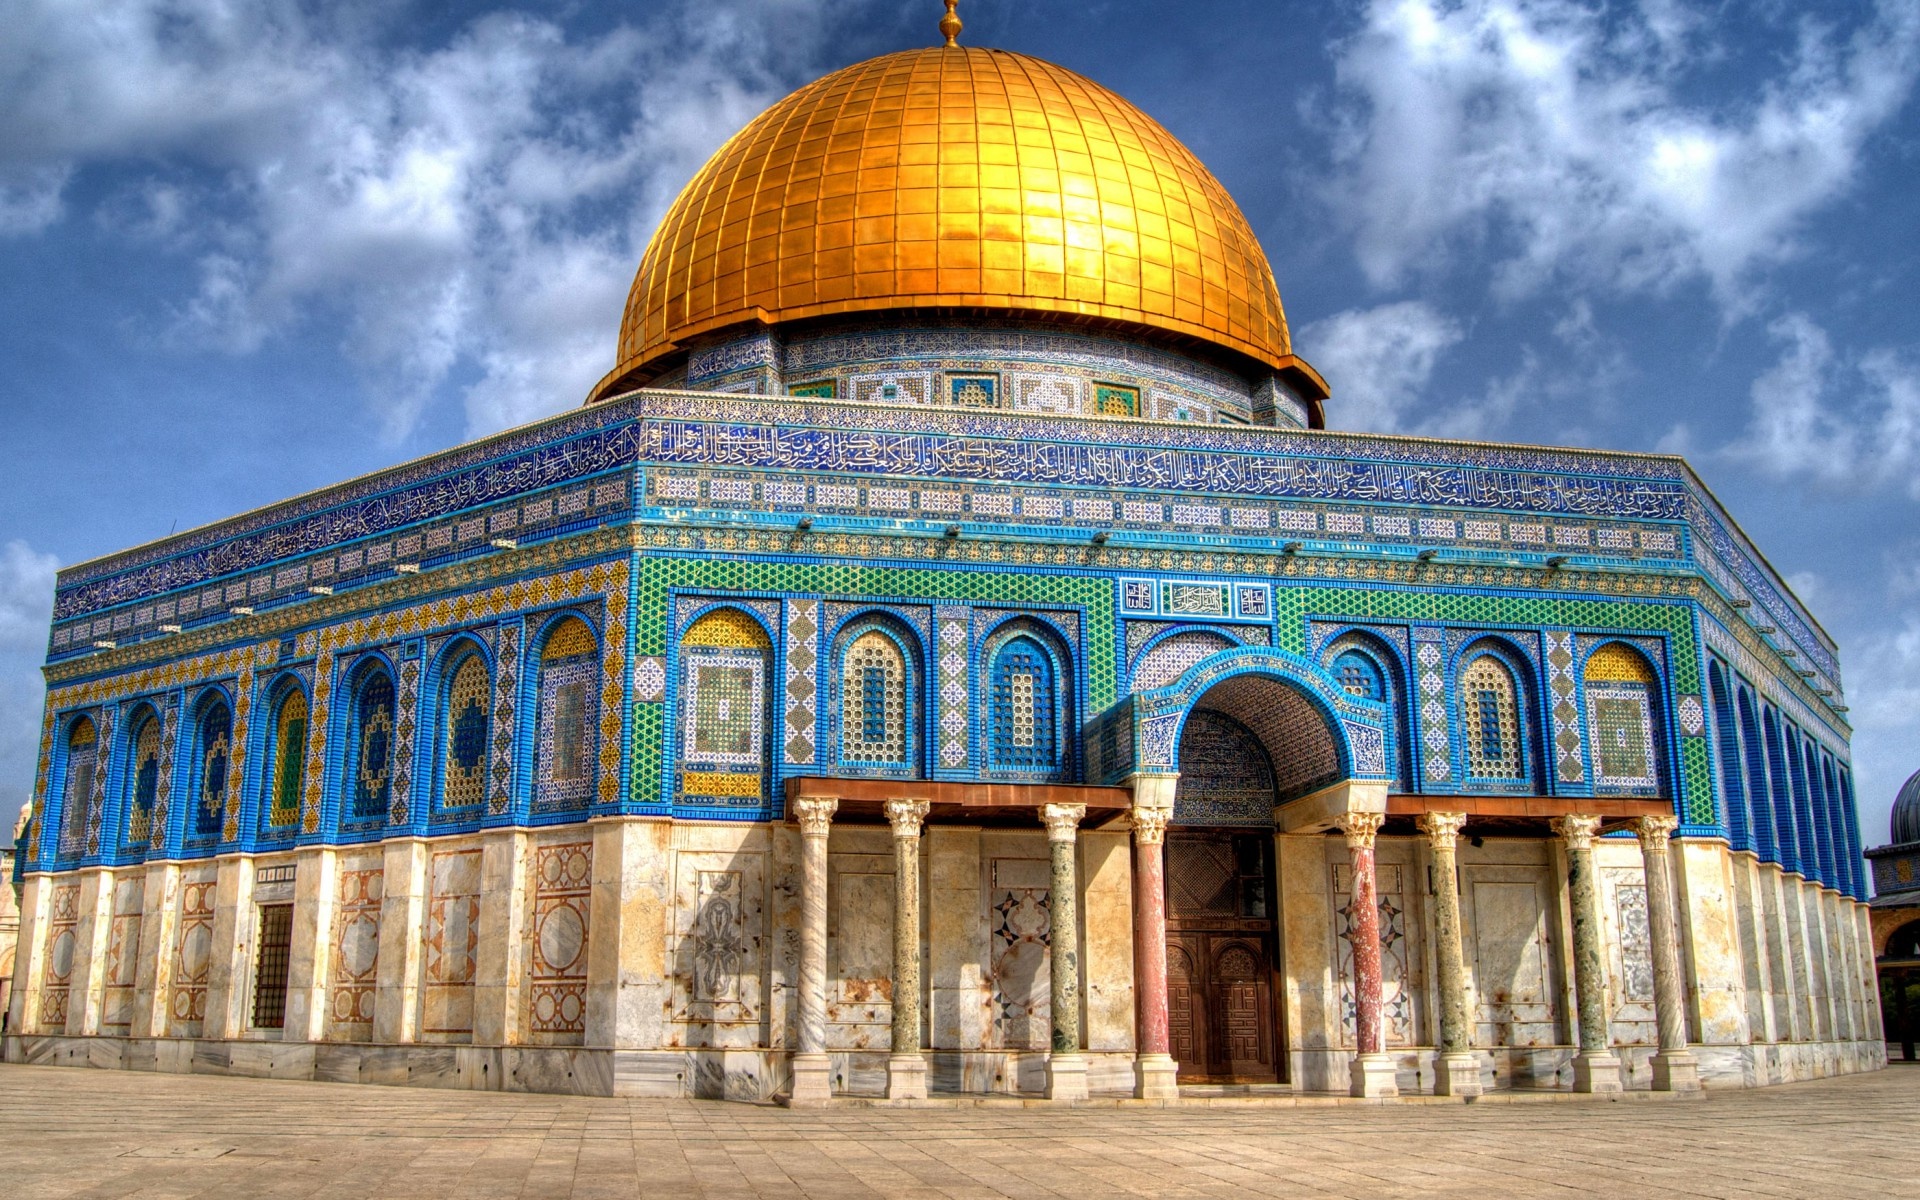 Jerusalem, HD wallpapers, High-quality visuals, Architectural beauty, 1920x1200 HD Desktop